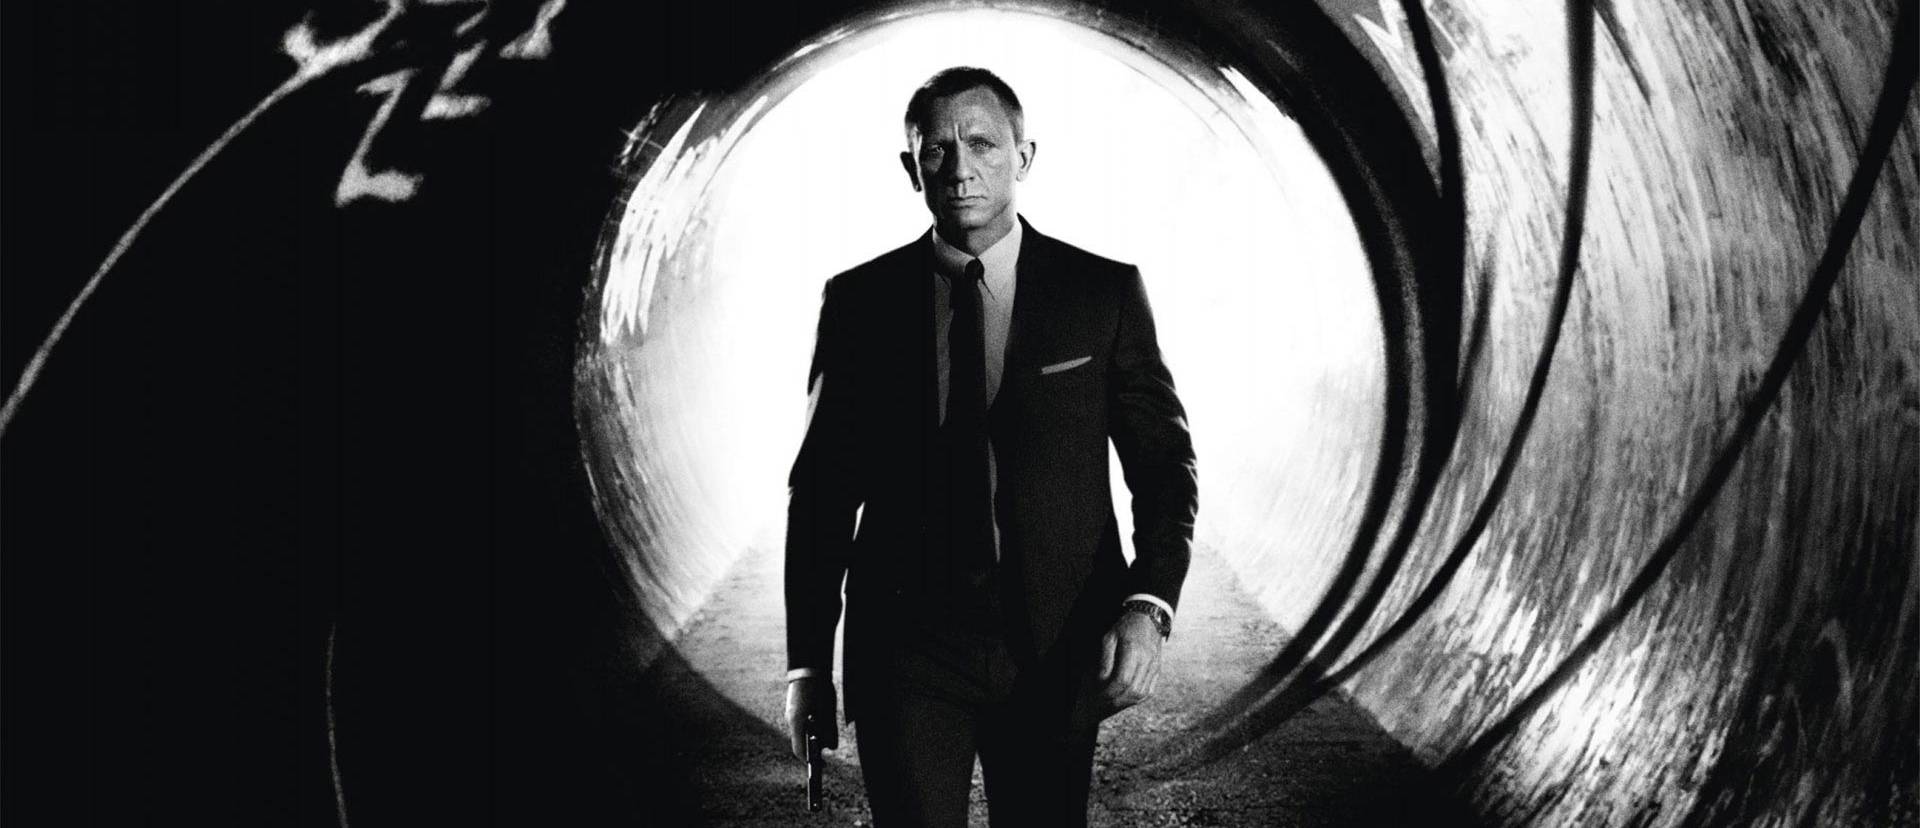 Viszlát Mr. Bond?